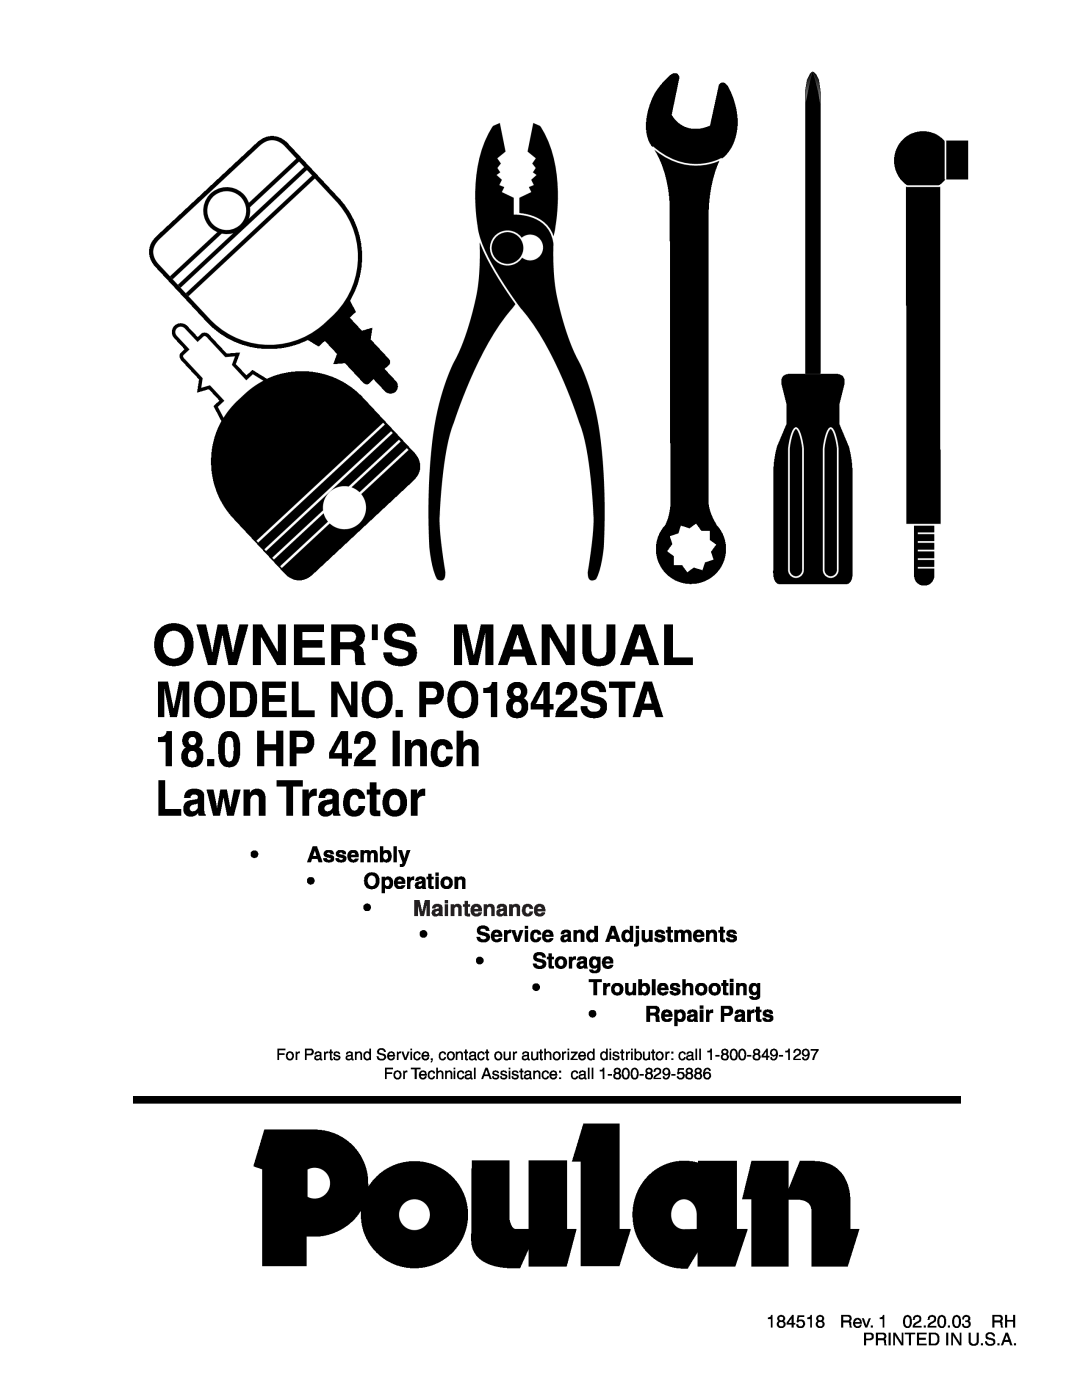 Poulan manual MODEL NO. PO1842STA 18.0 HP 42 Inch Lawn Tractor 